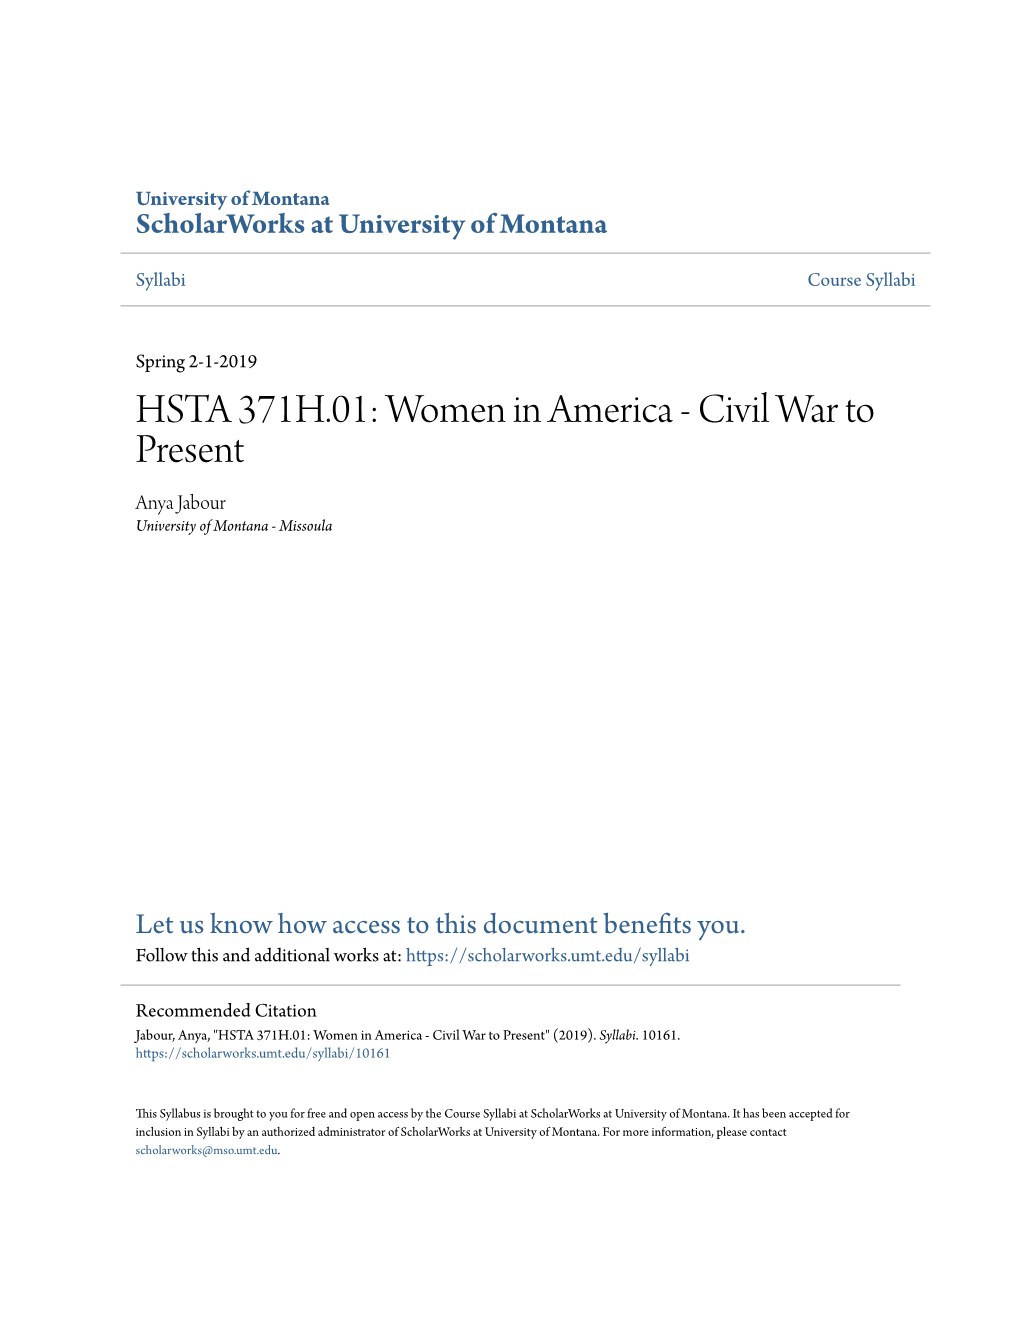 HSTA 371H.01: Women in America - Civil War to Present Anya Jabour University of Montana - Missoula